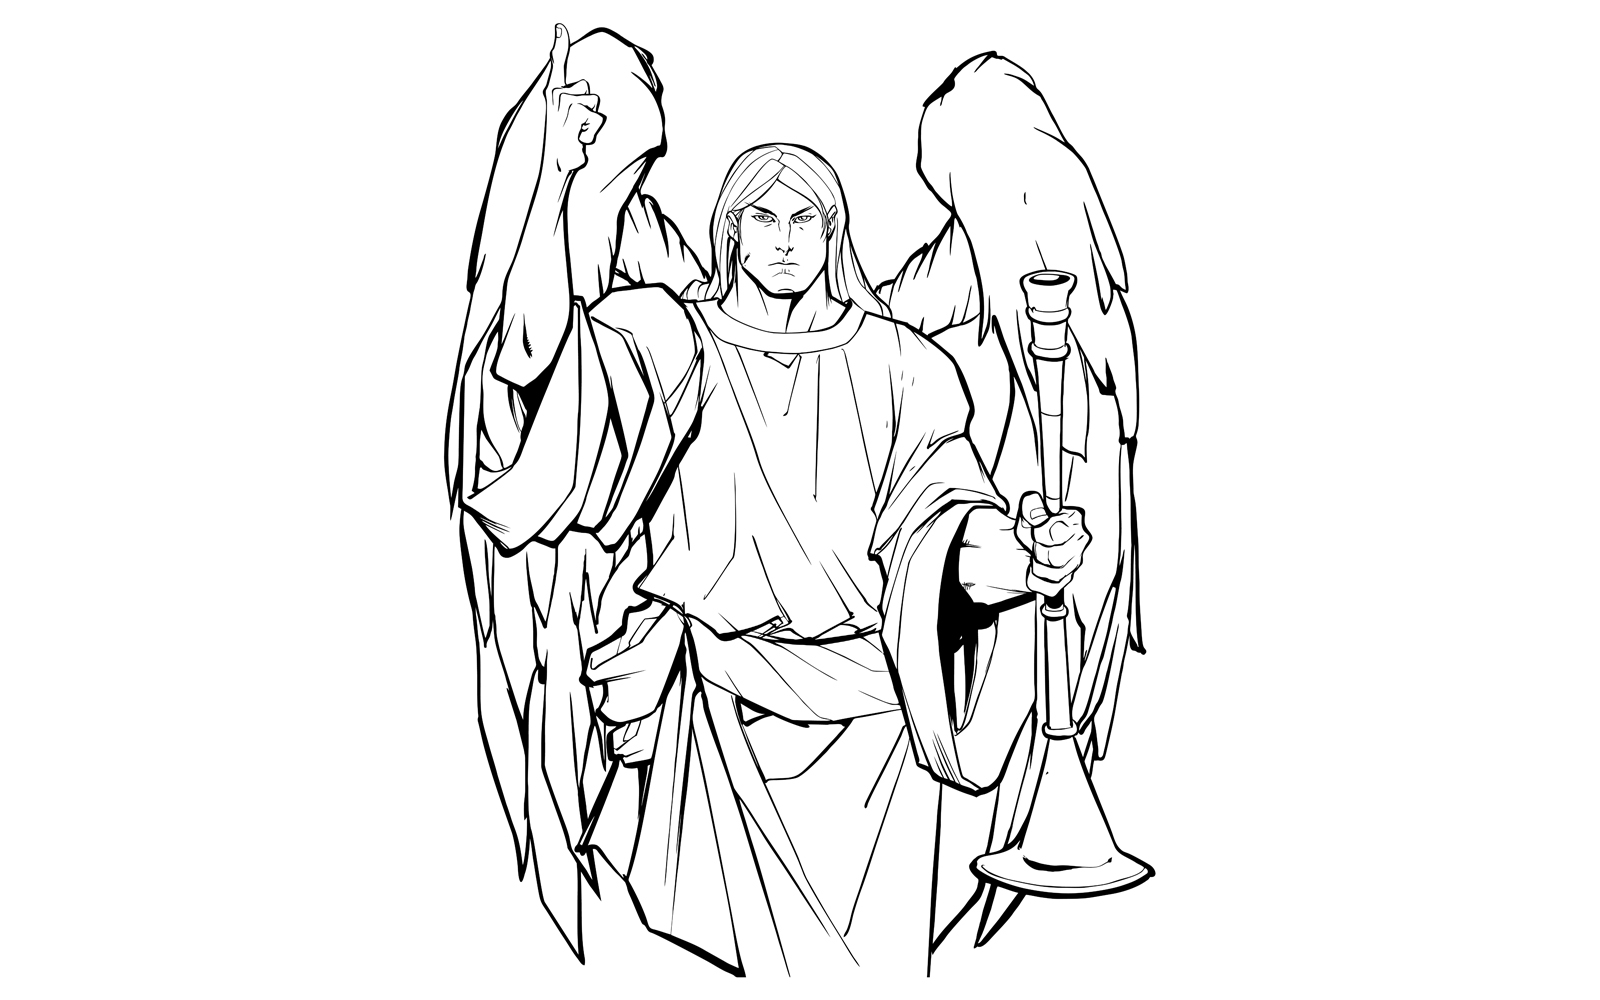 Archangel Gabriel Line Art - Illustration